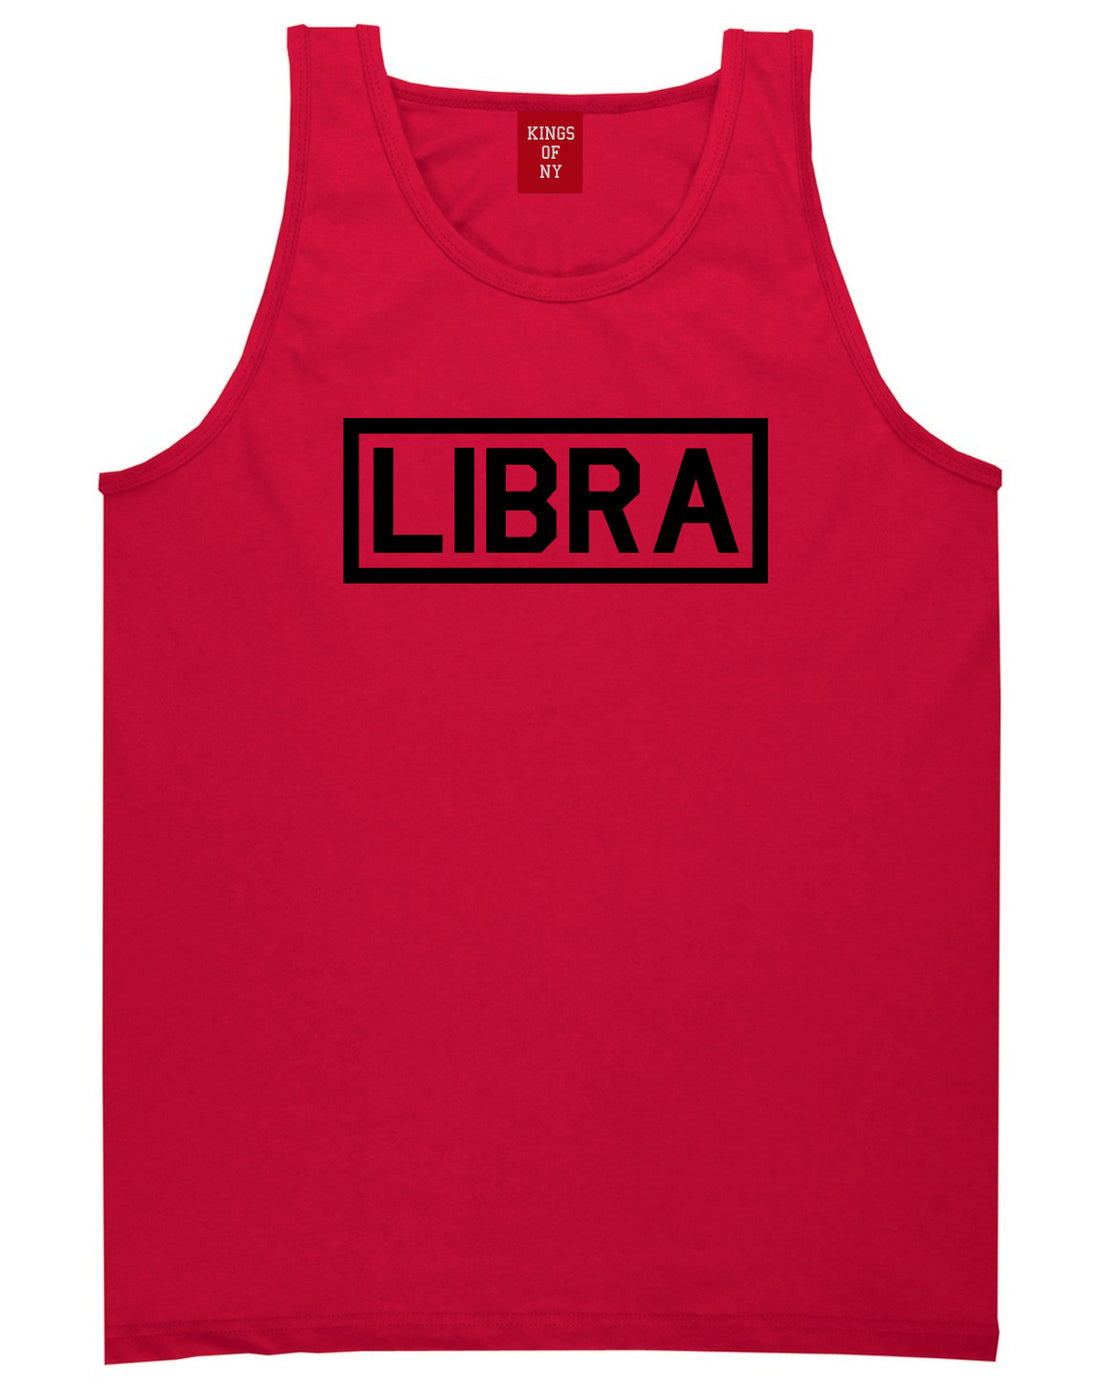 Libra Horoscope Sign Mens Red Tank Top Shirt by KINGS OF NY